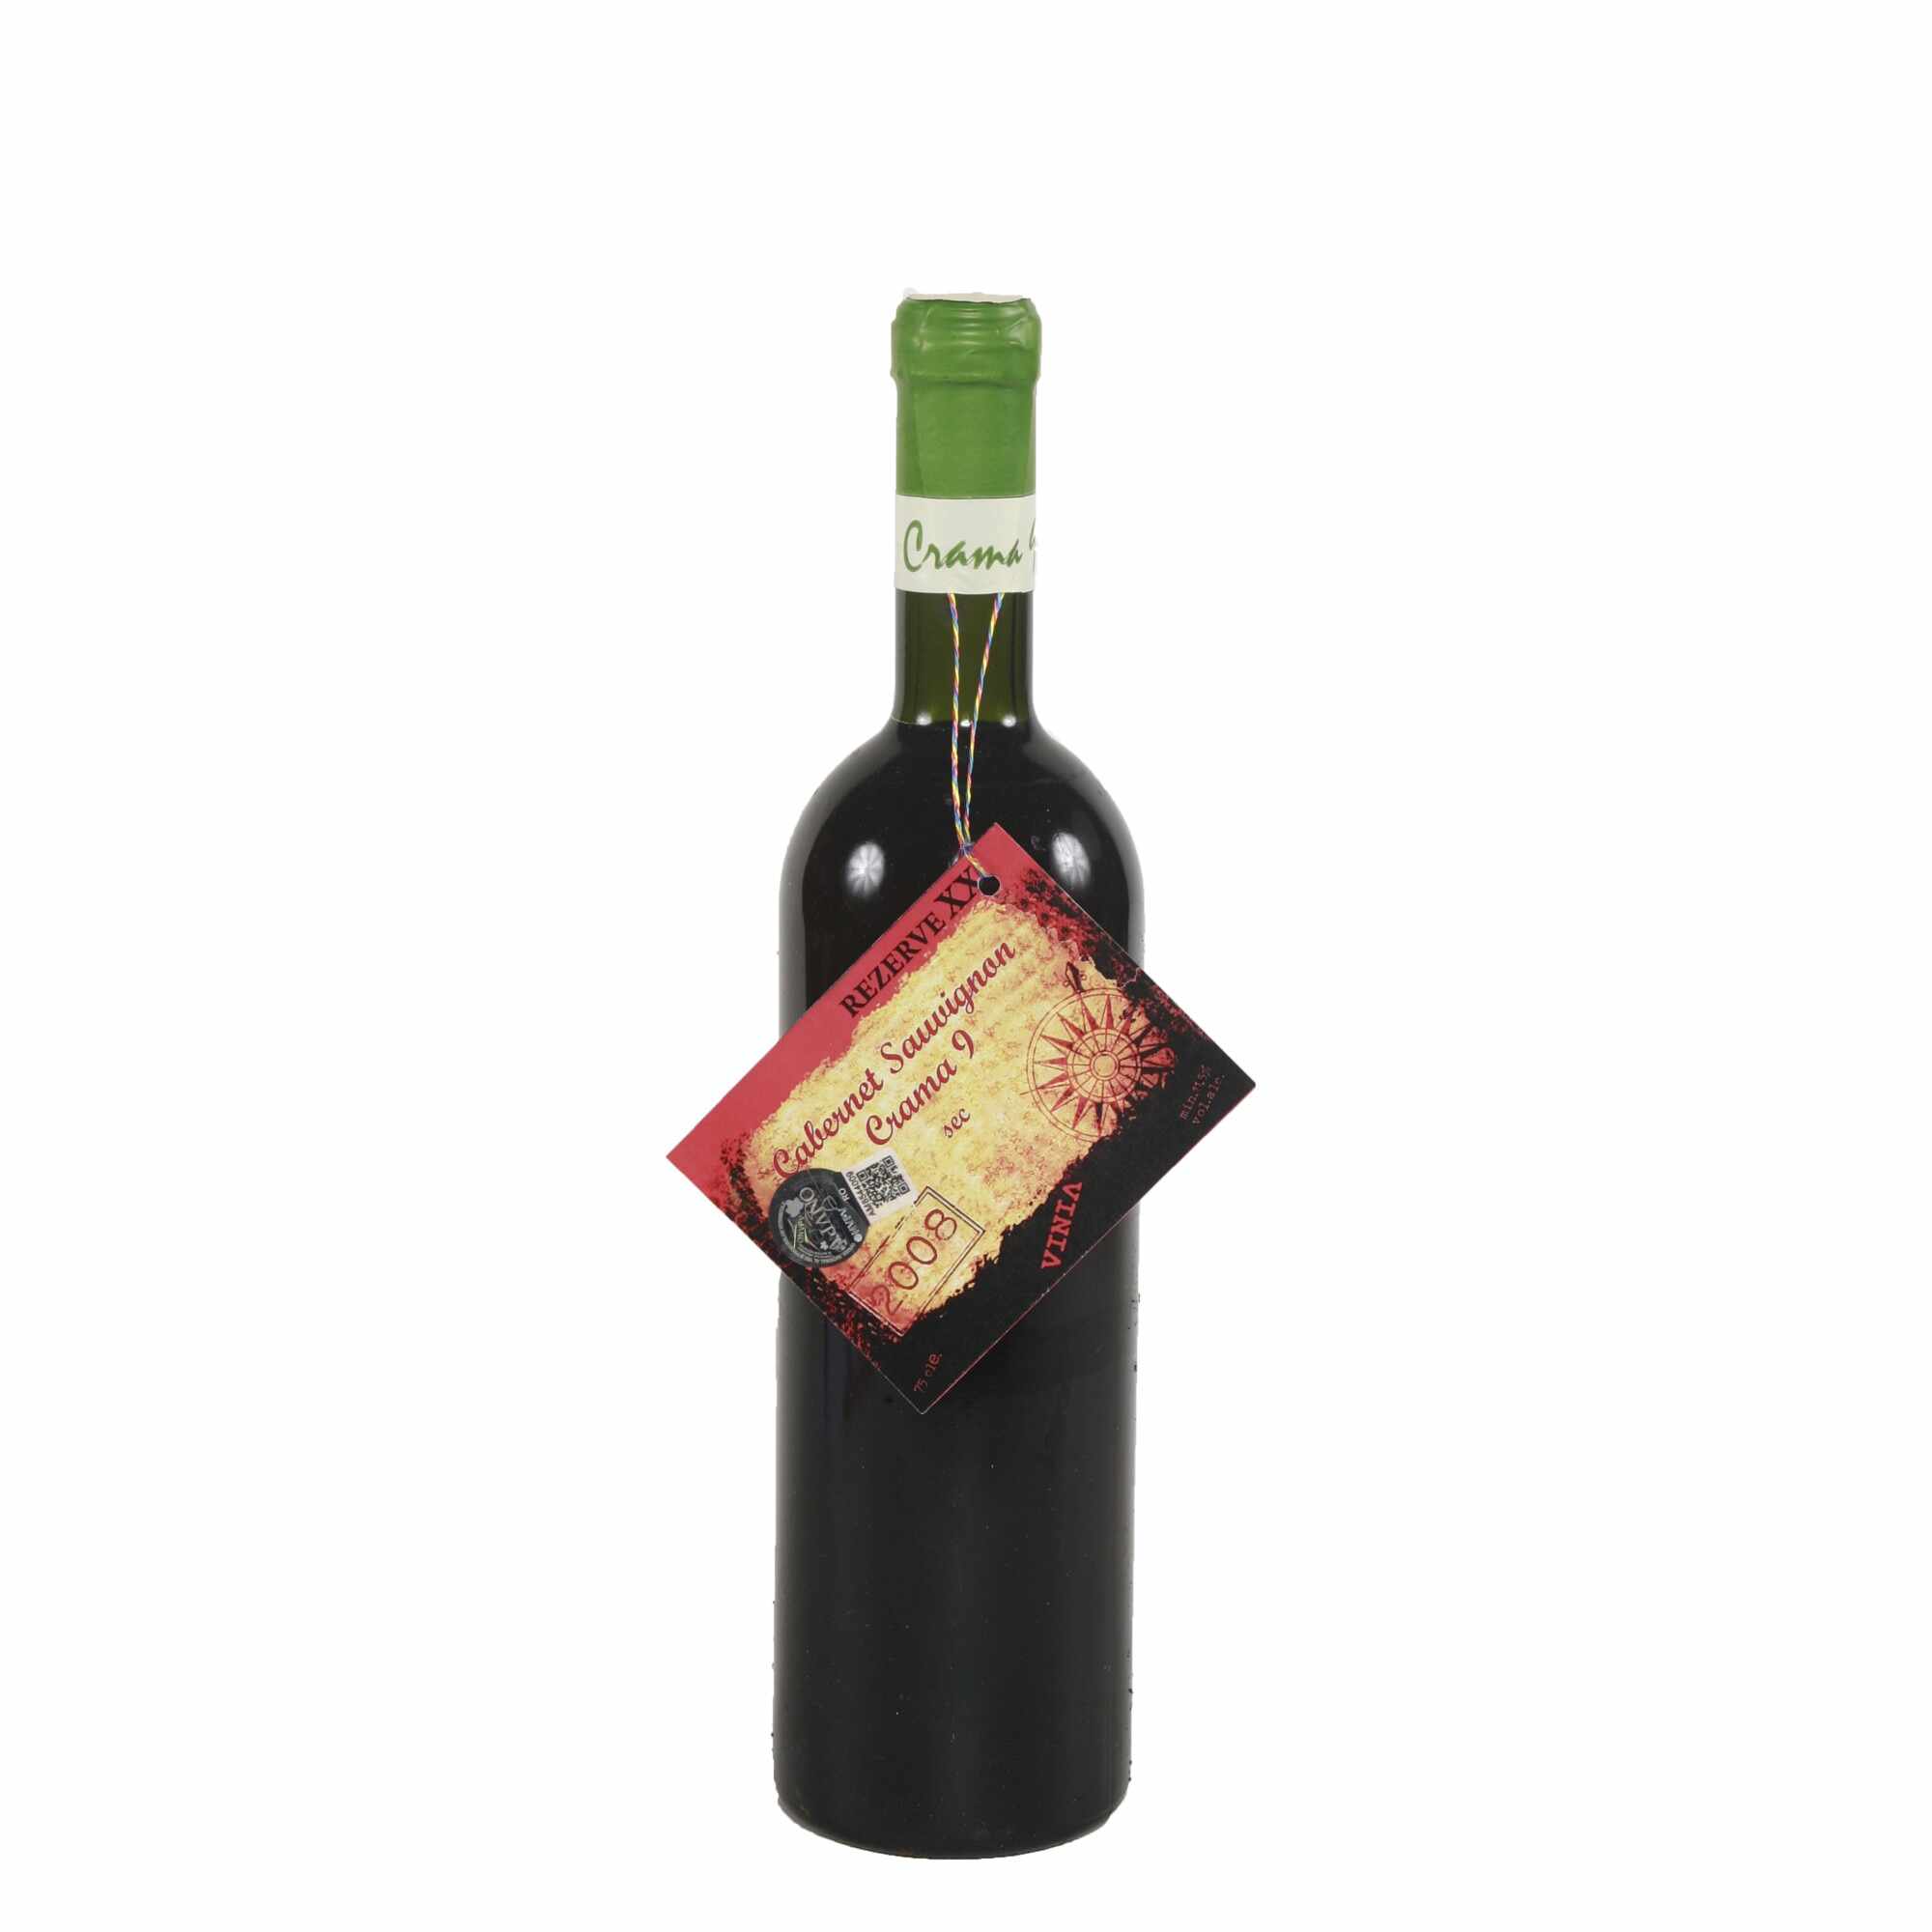 Vin rosu,Cabernet Sauvignon Crama 9, Podgoria Bohotin, 2008, sec, Vinia, 0.75 l